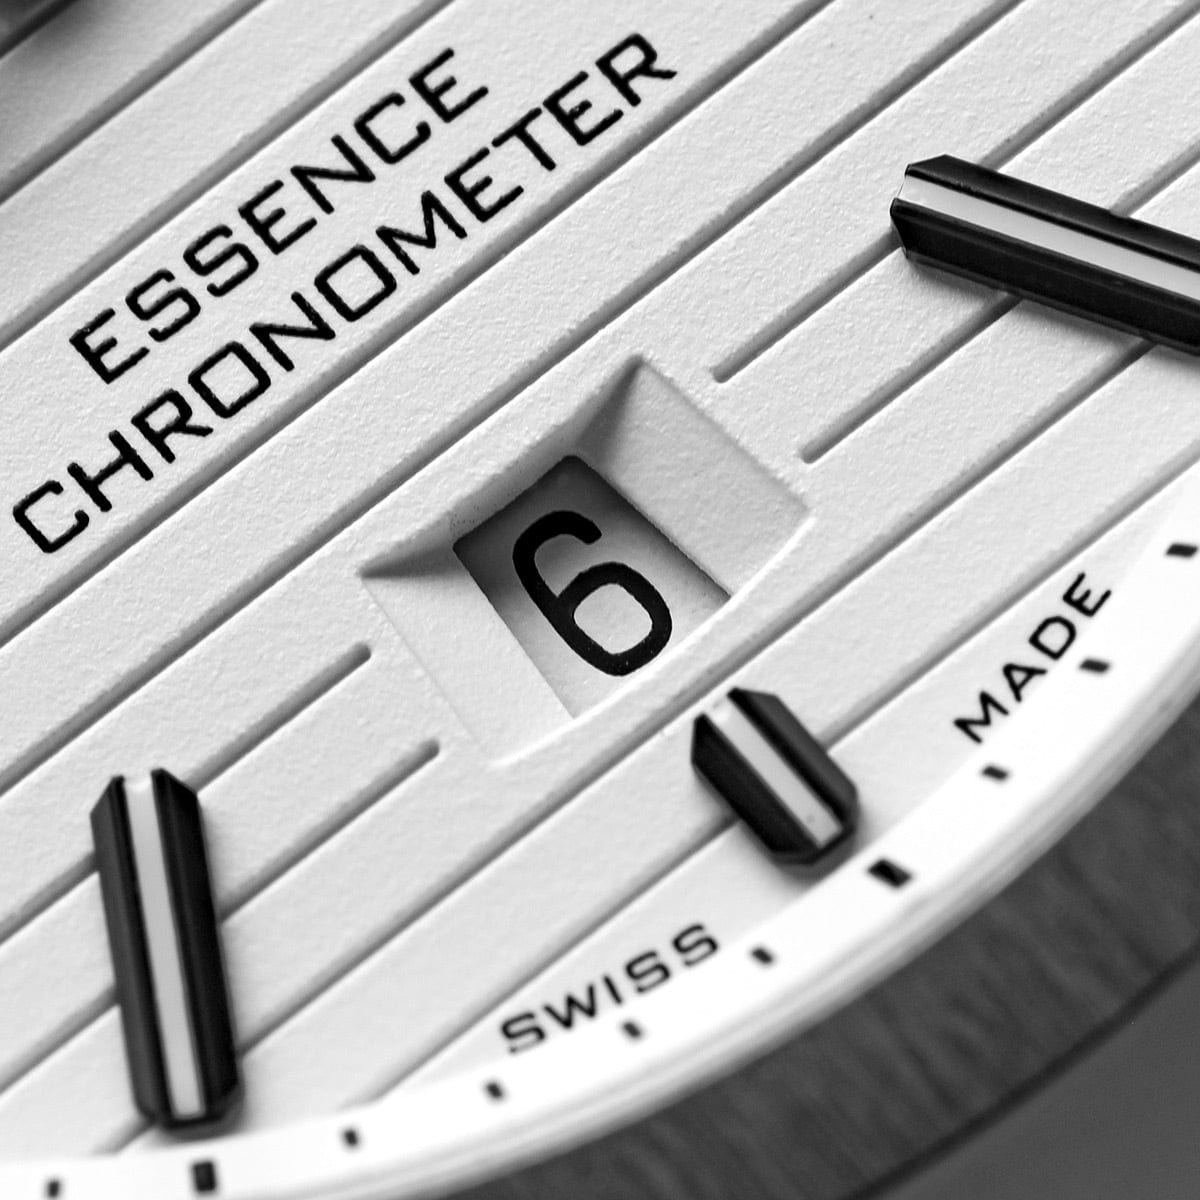 Formex Essence 39 Automatic Chronometer Watch - Green / Steel Bracelet - LIKE NEW